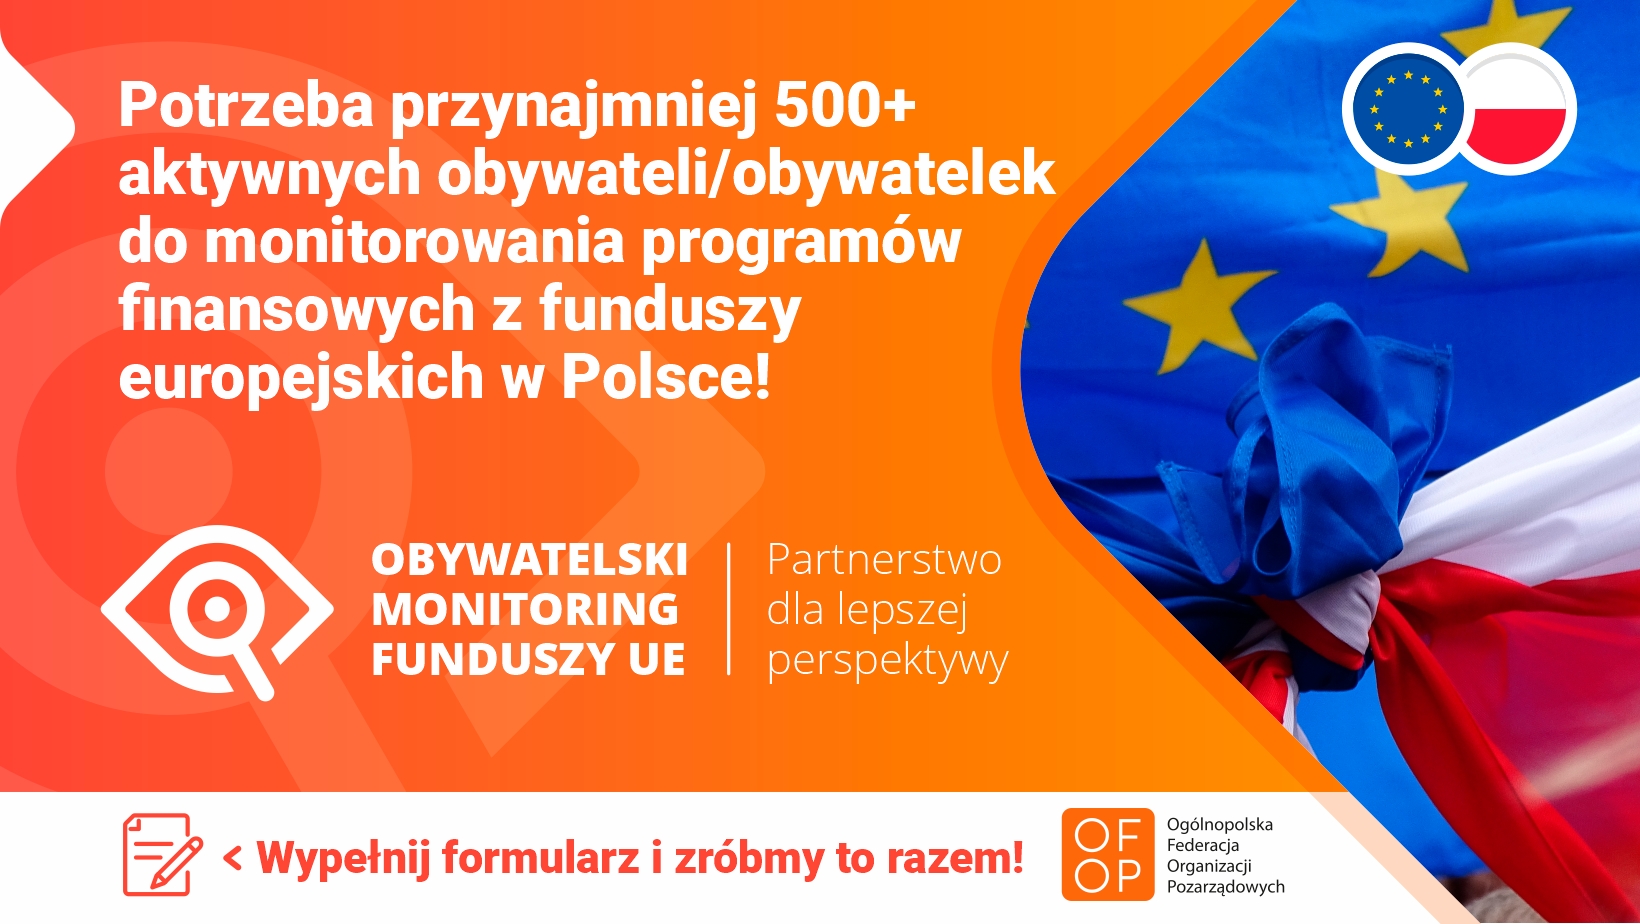 OFOP_obywatelski_monitoring_funduszyUE.jpg